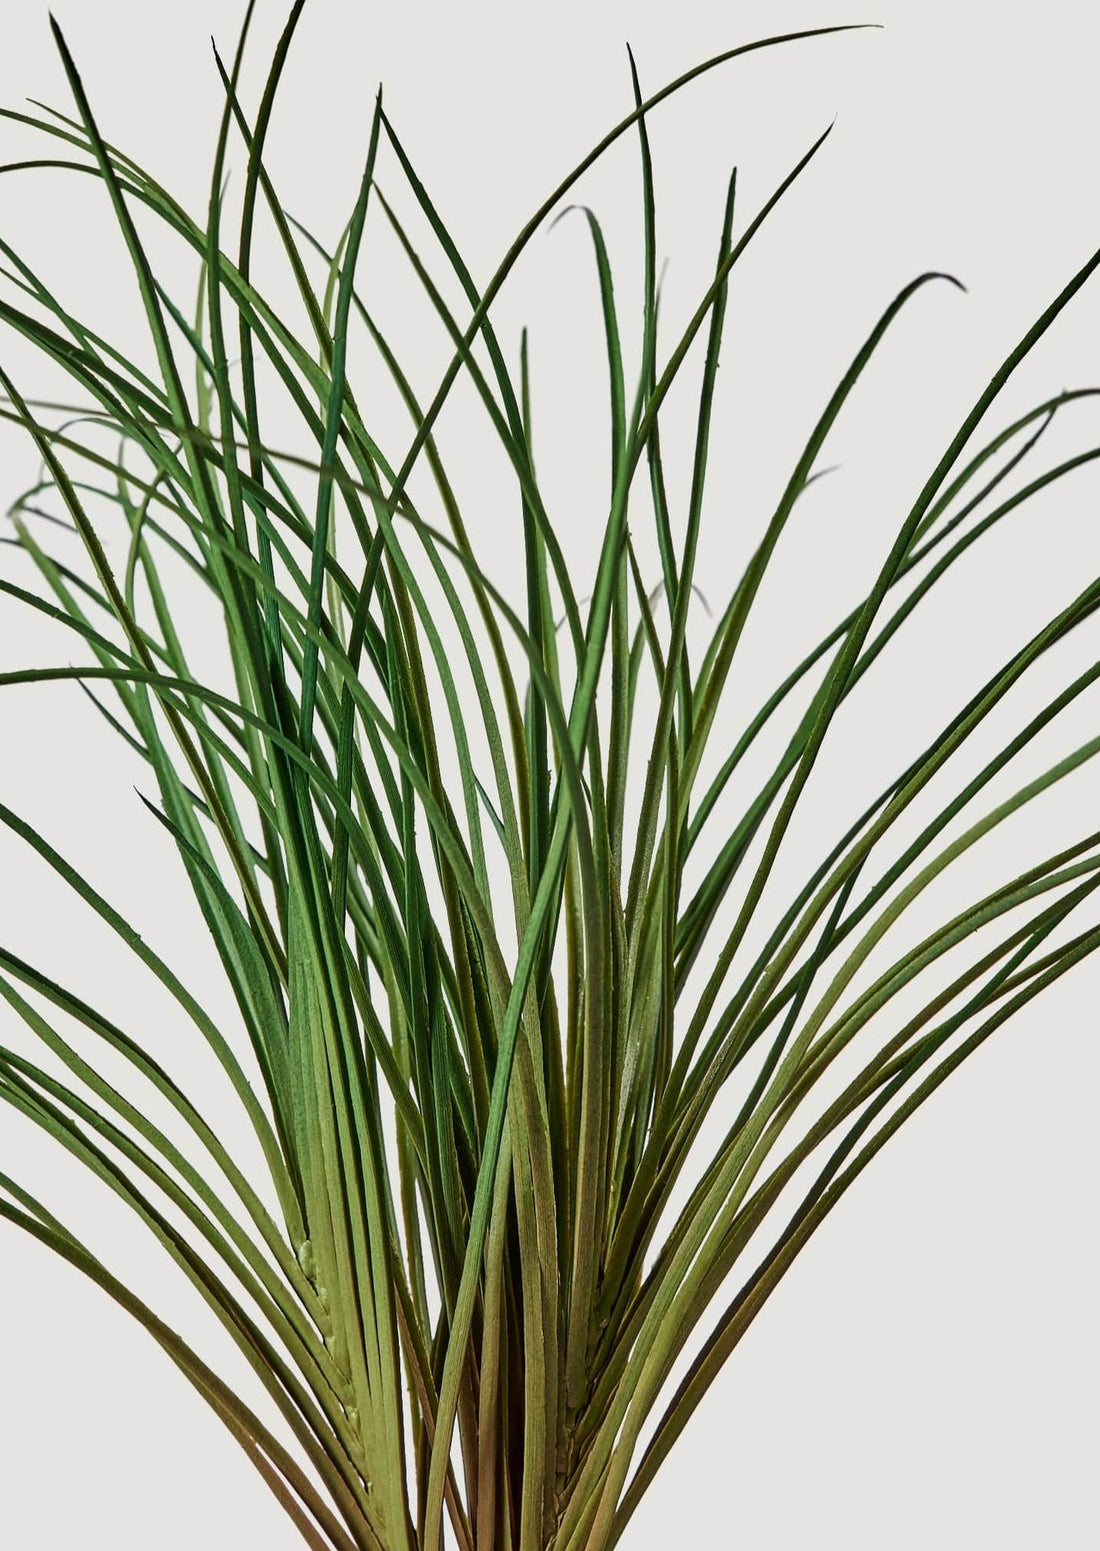 Faux Onion Grass Plant in Afloral Closeup View